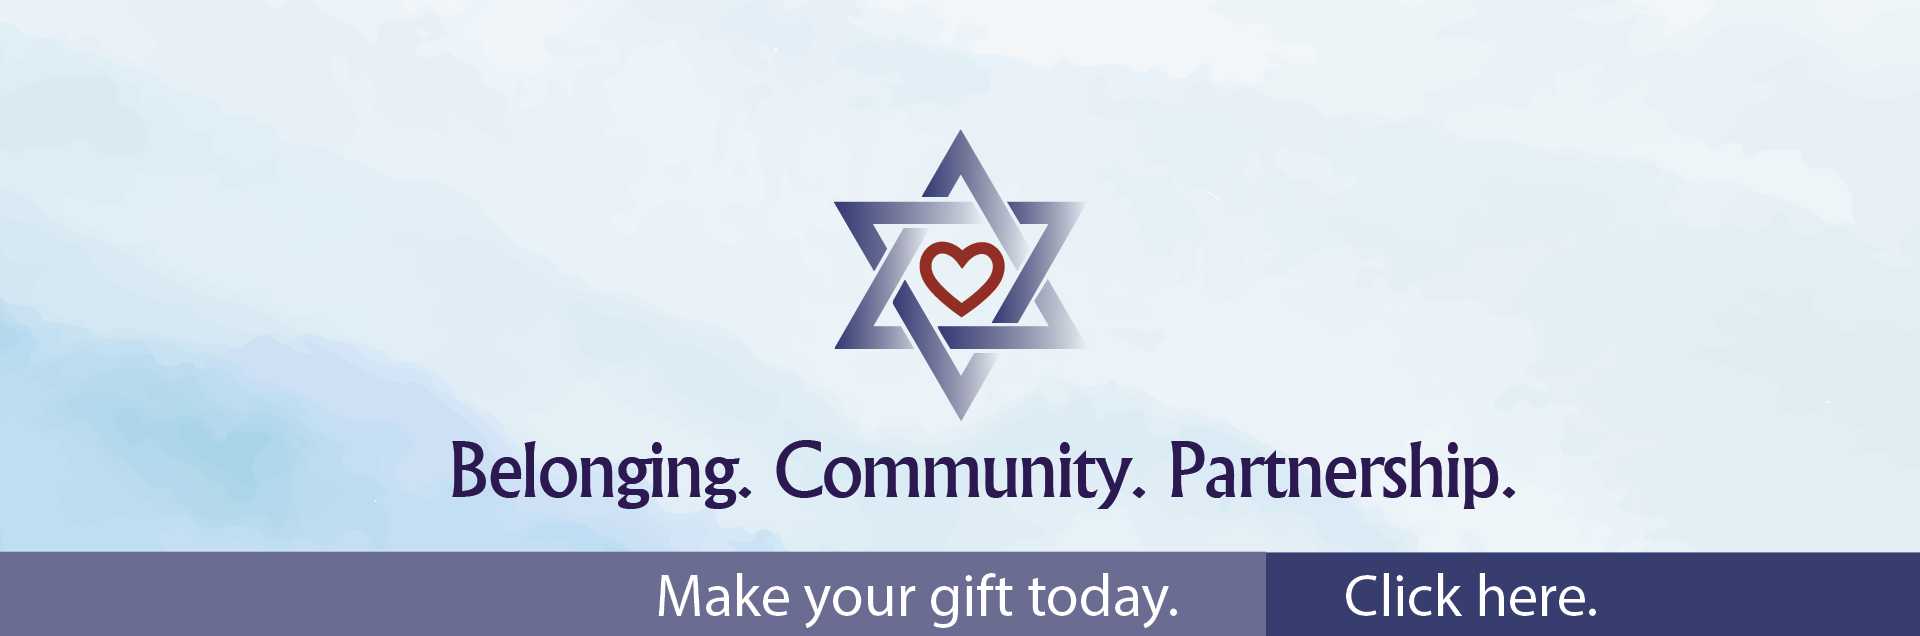 Belonging. Community. Partnership. Make your gift today.